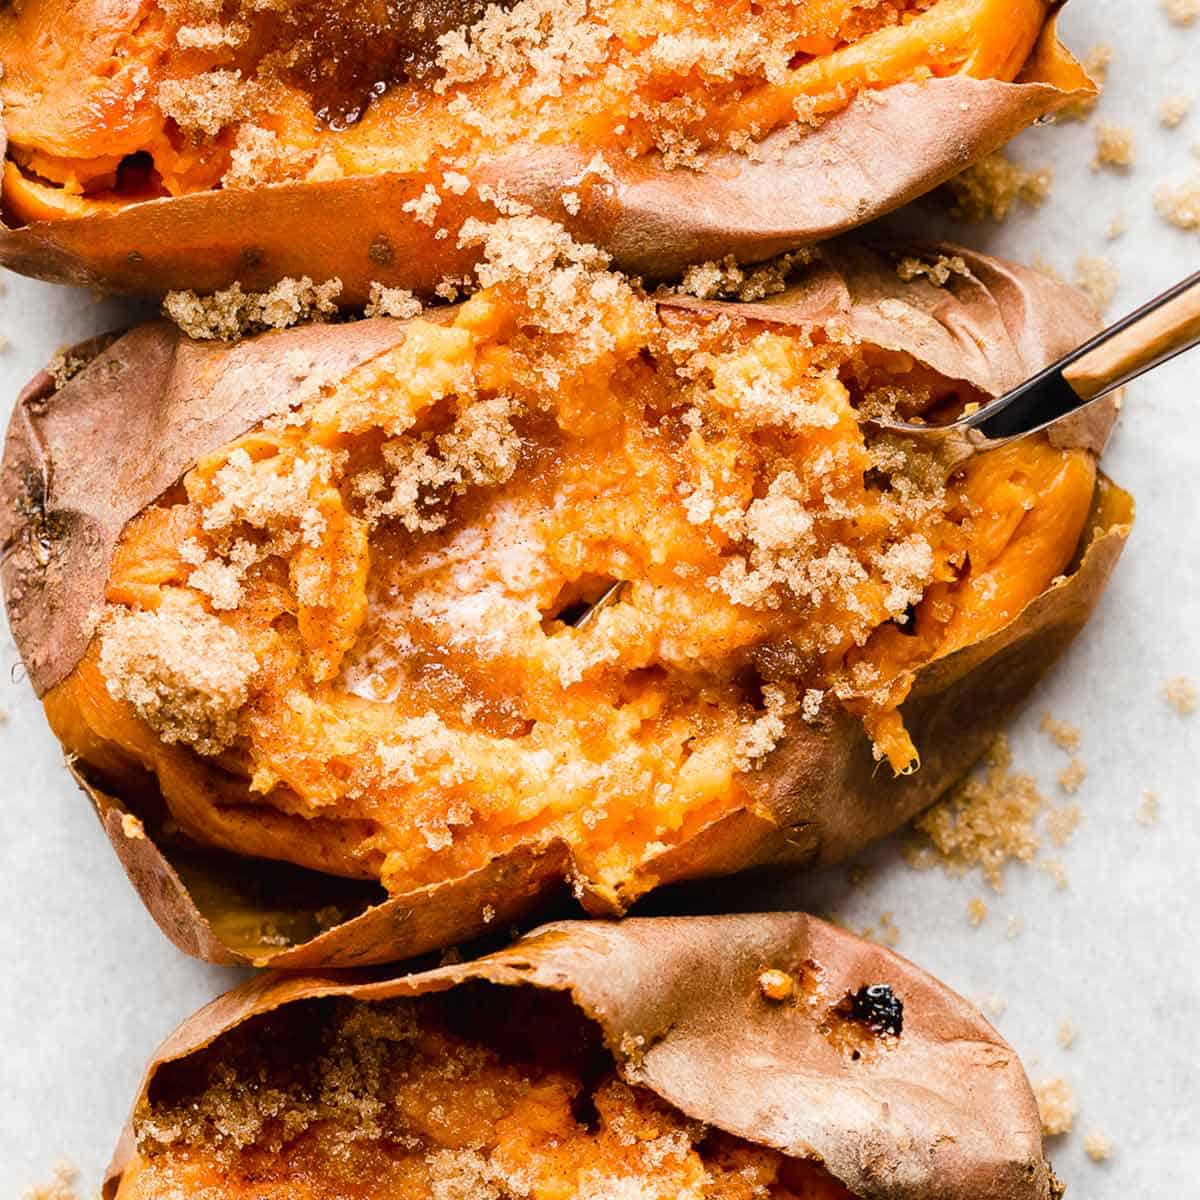 https://saltandbaker.com/wp-content/uploads/2020/10/perfectly-baked-sweet-potato.jpg